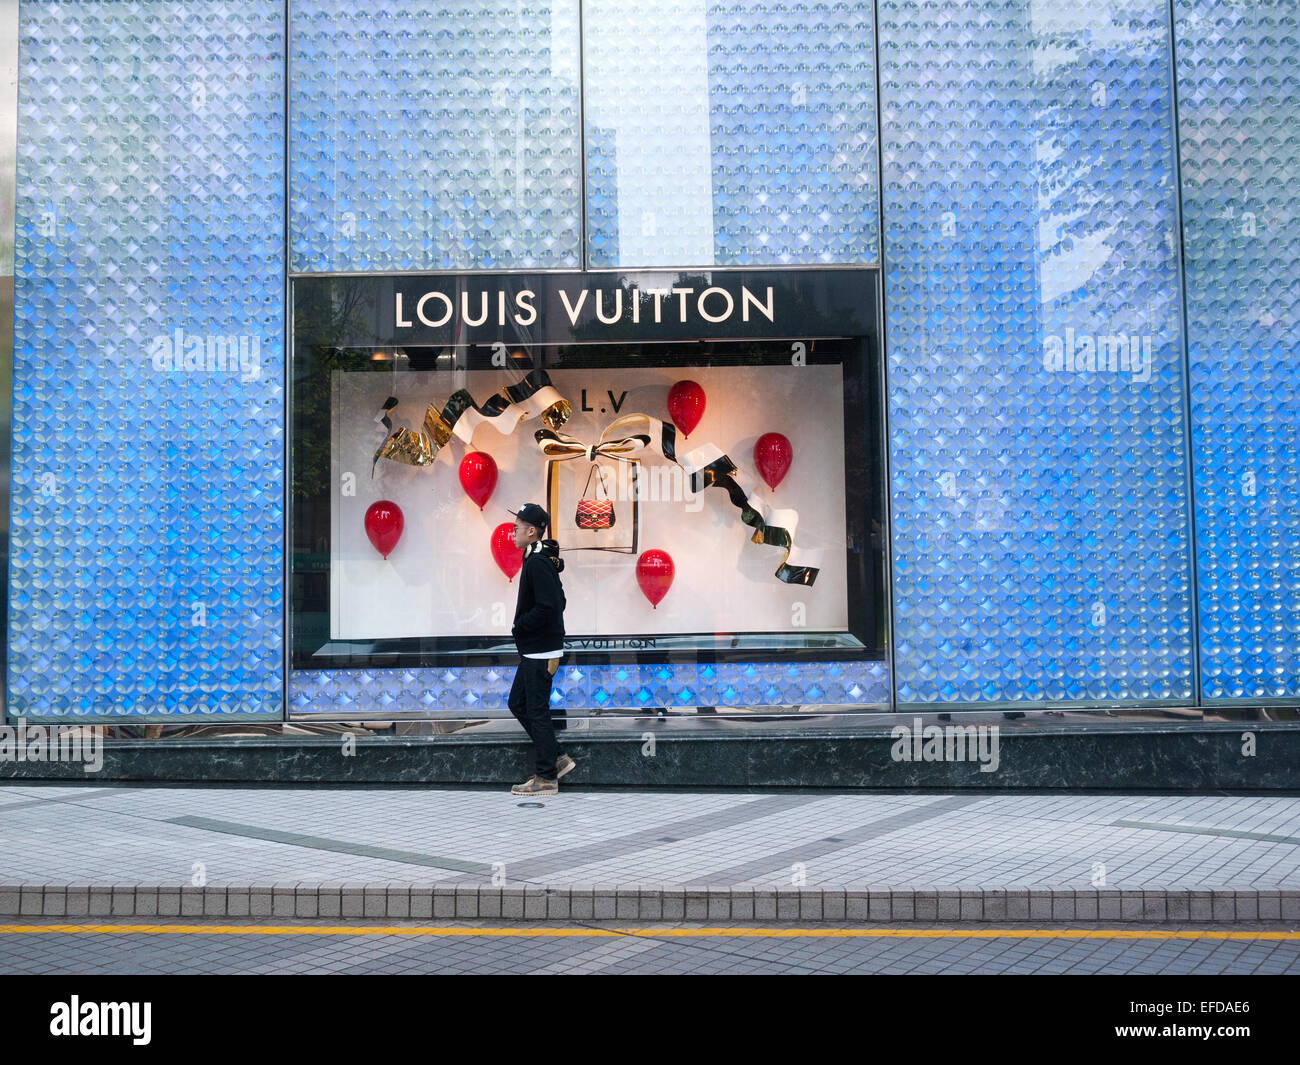 Louis Vuitton store in Hong Kong – Stock Editorial Photo © Krasnevsky  #54957095